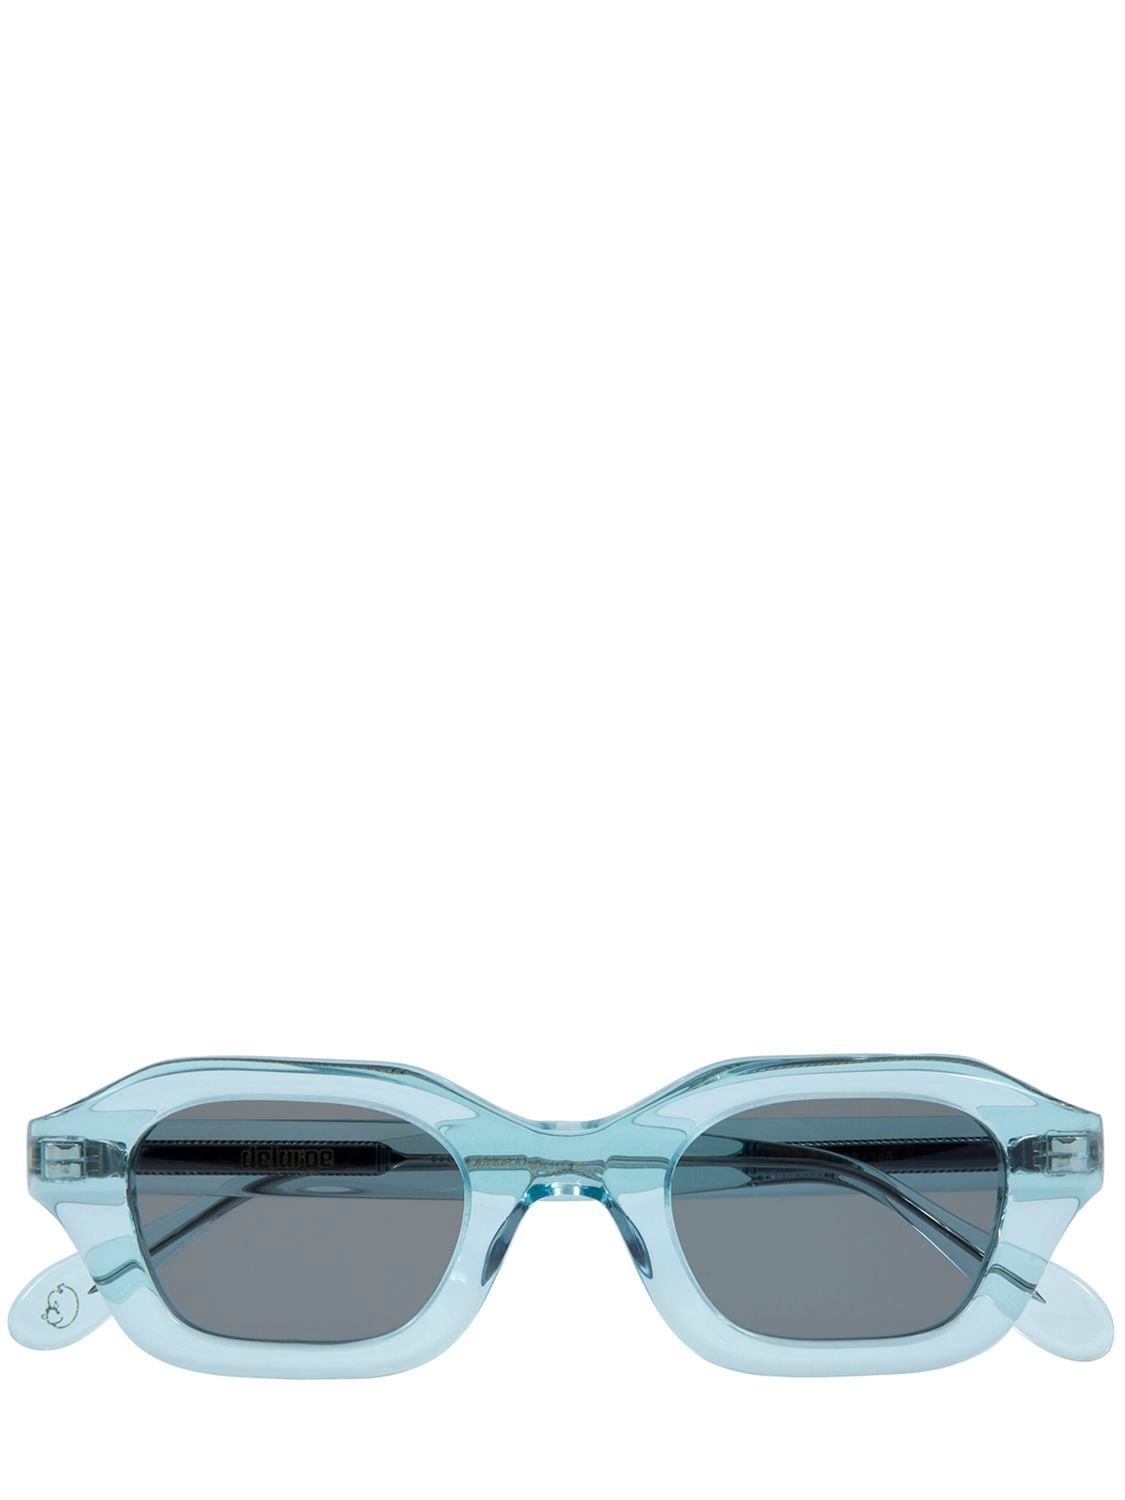 Image of Streams Squared Acetate Sunglasses